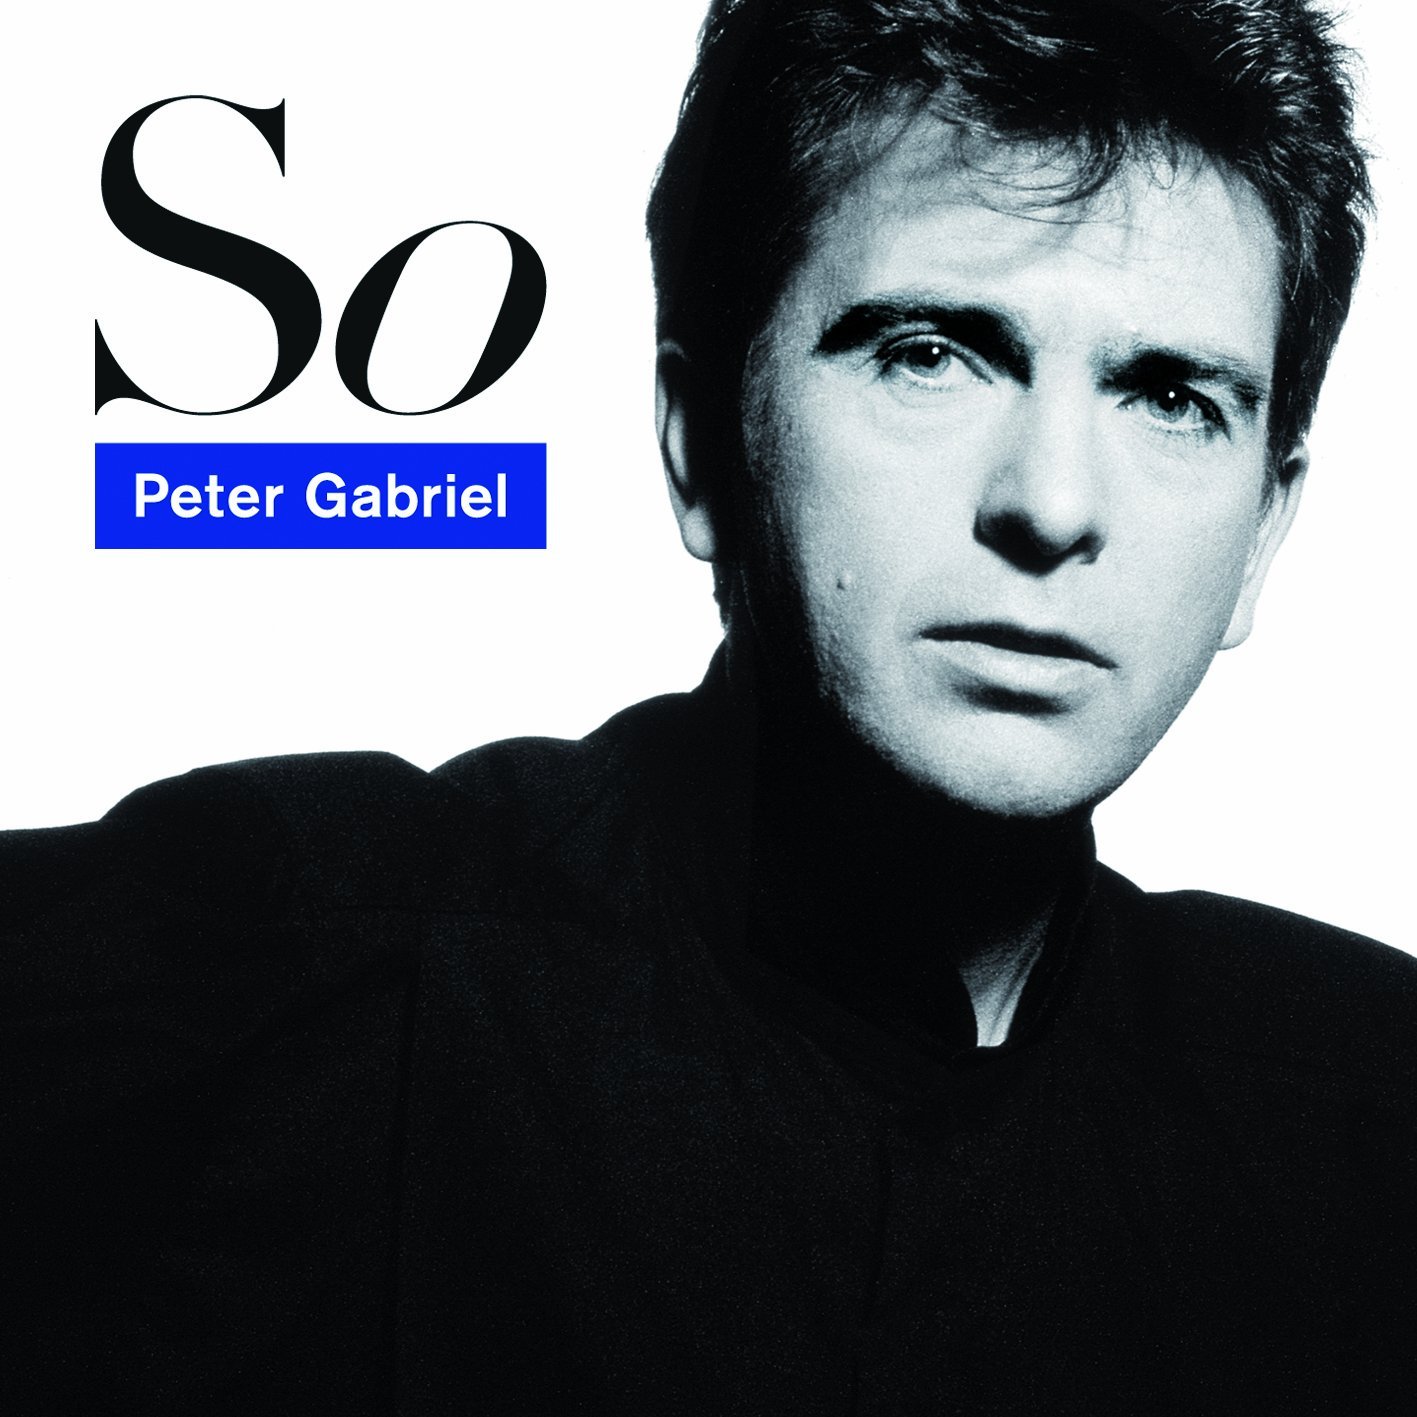 Peter Gabriel's "So" Turns 30